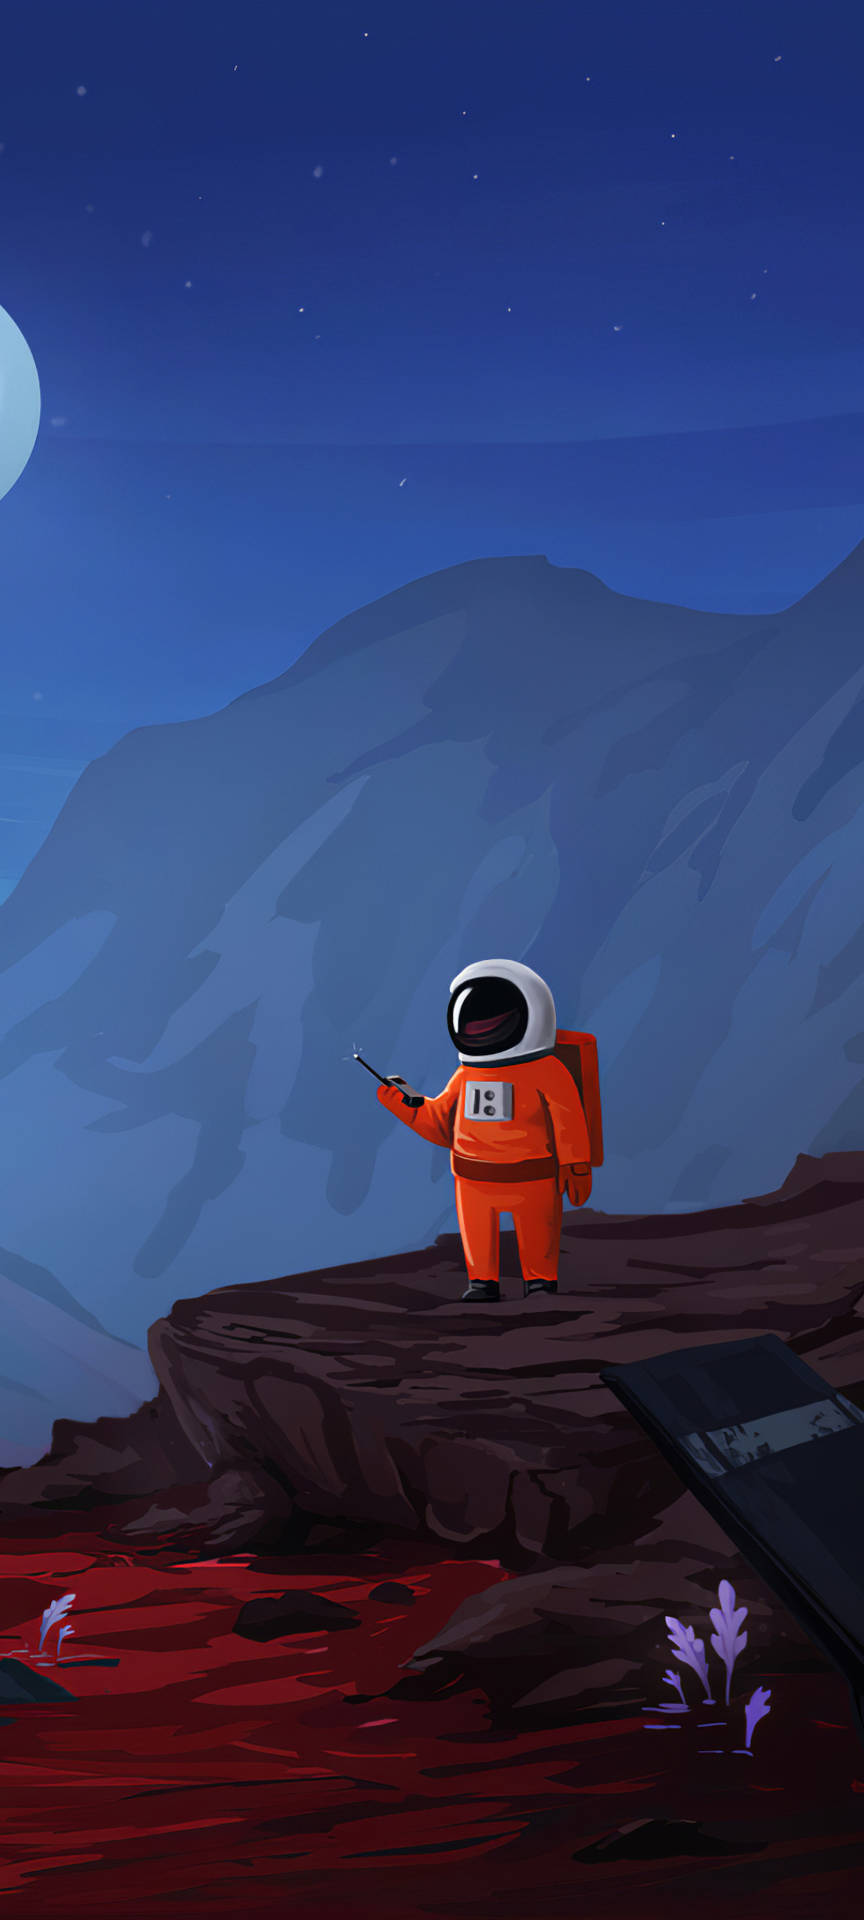 Cartoon Astronaut With Walkie-talkie Wallpaper